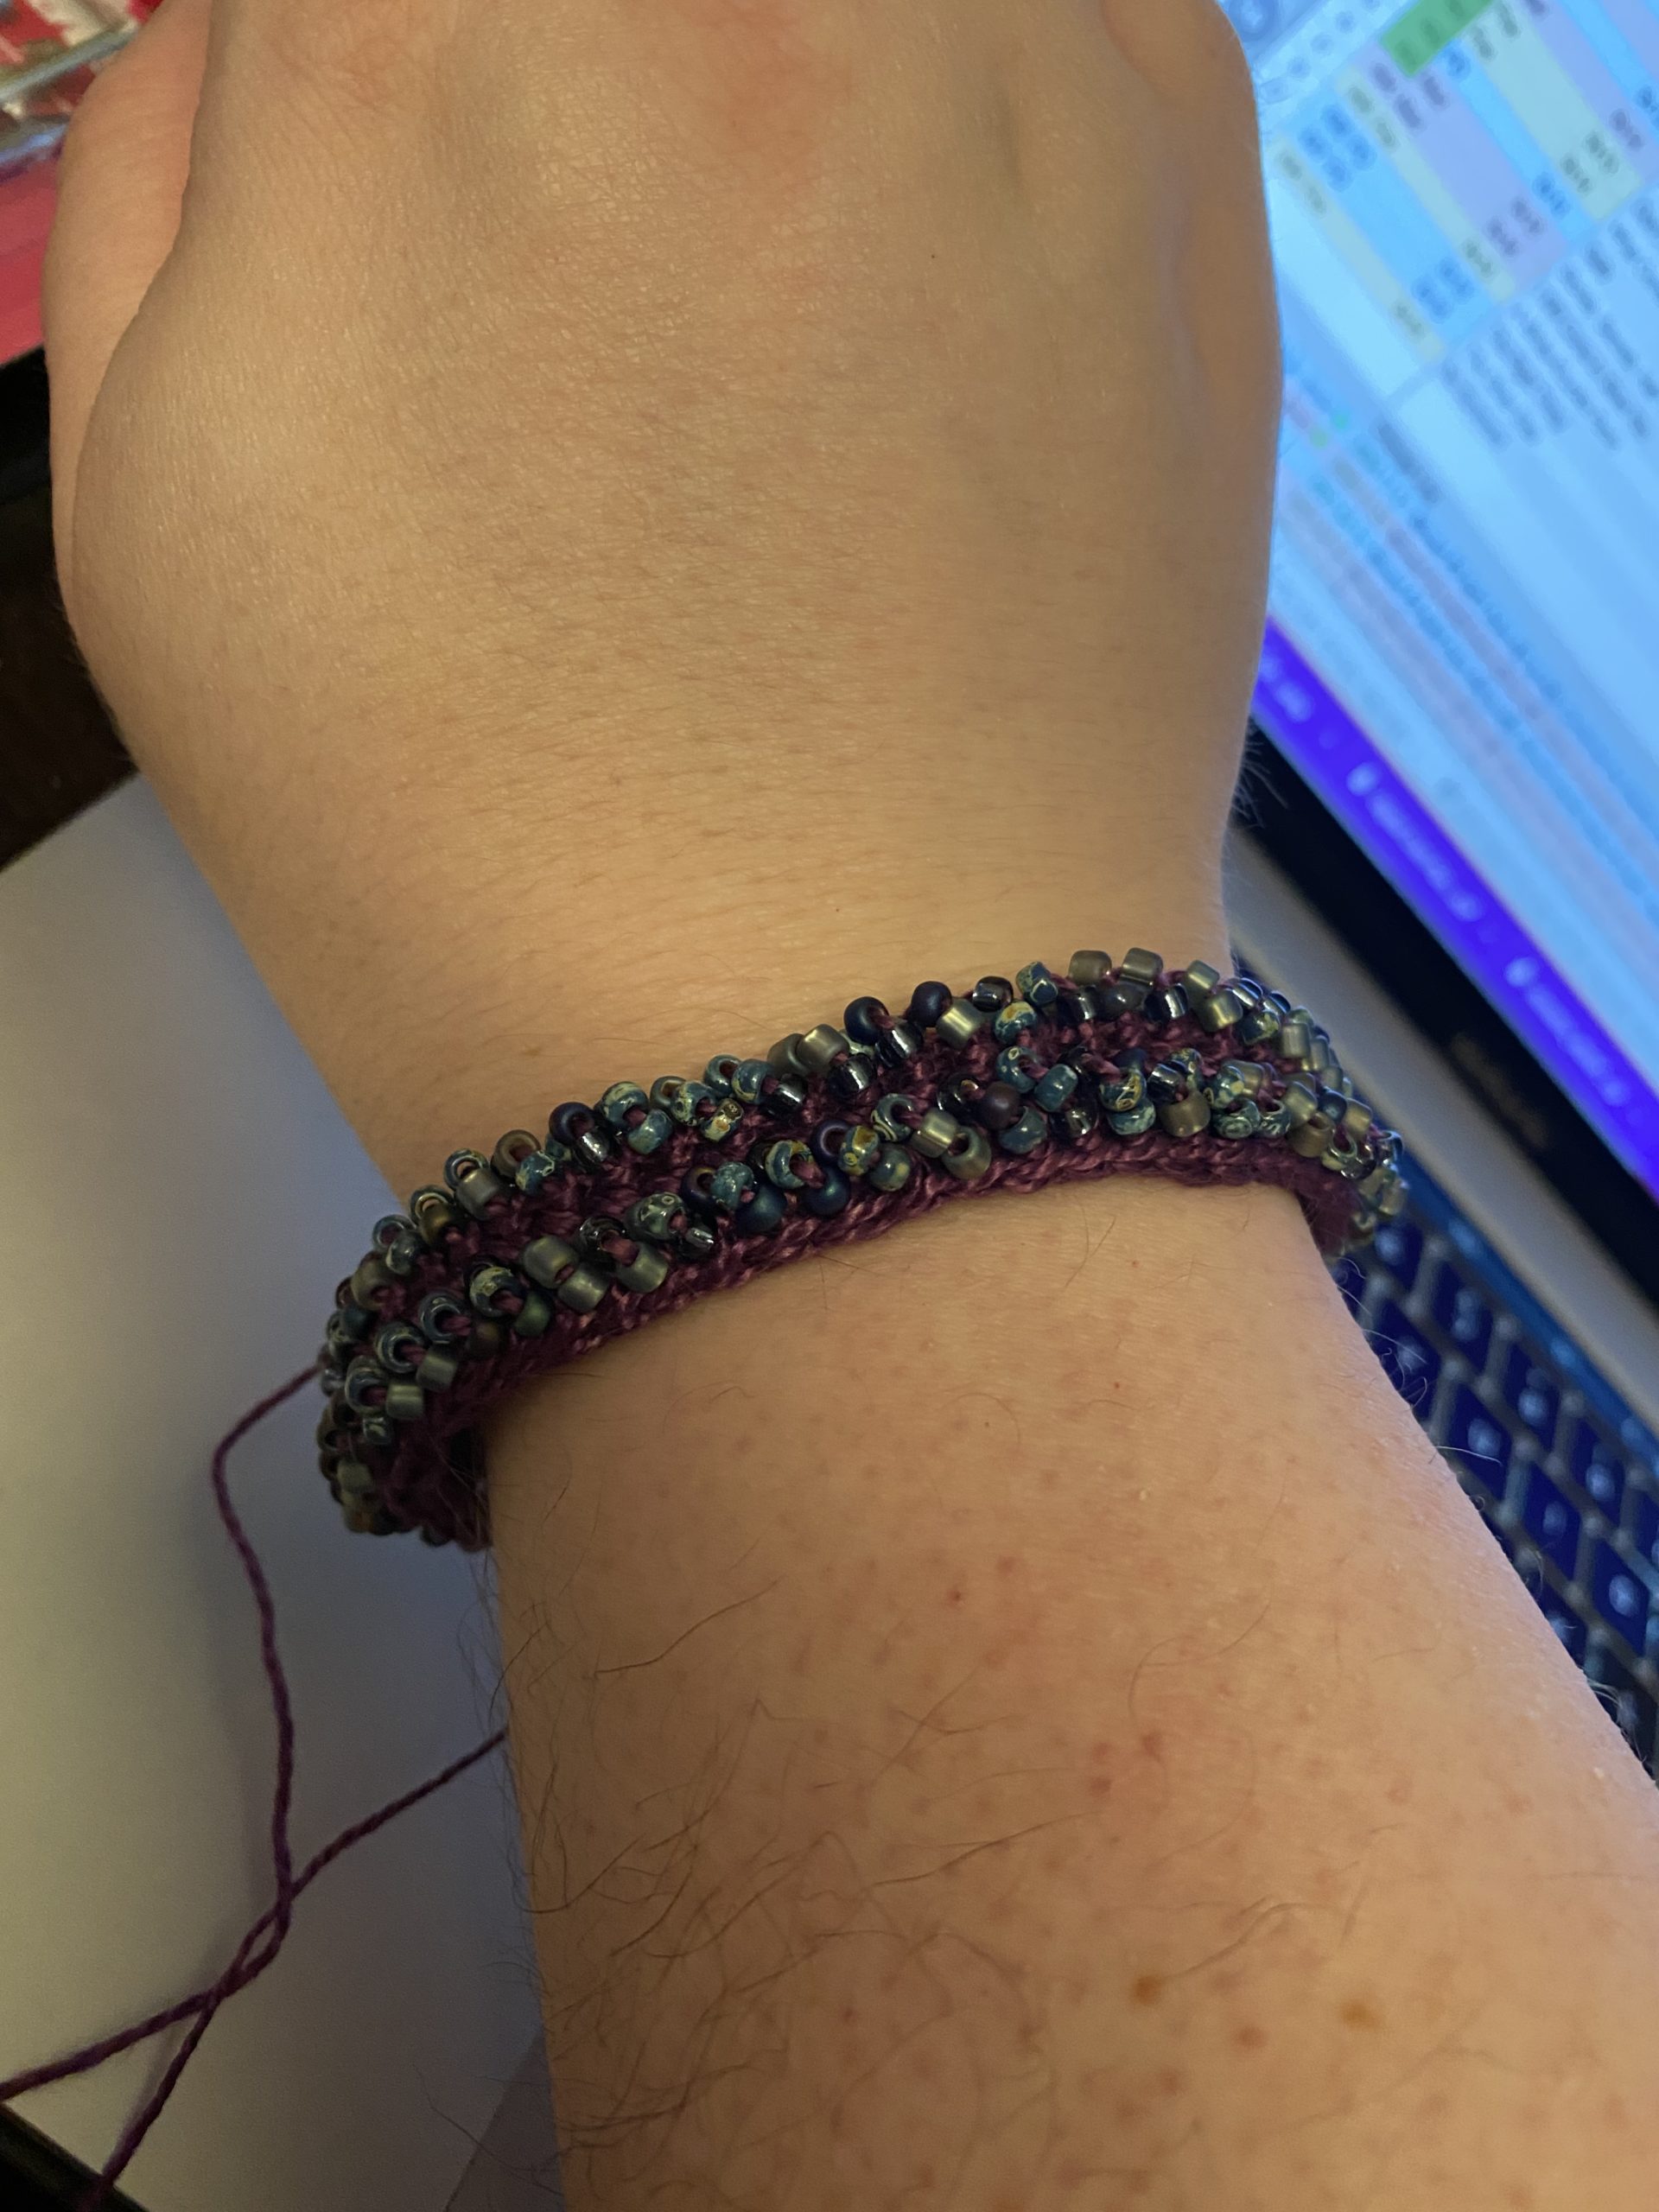 Mingle Crochet bracelet complete